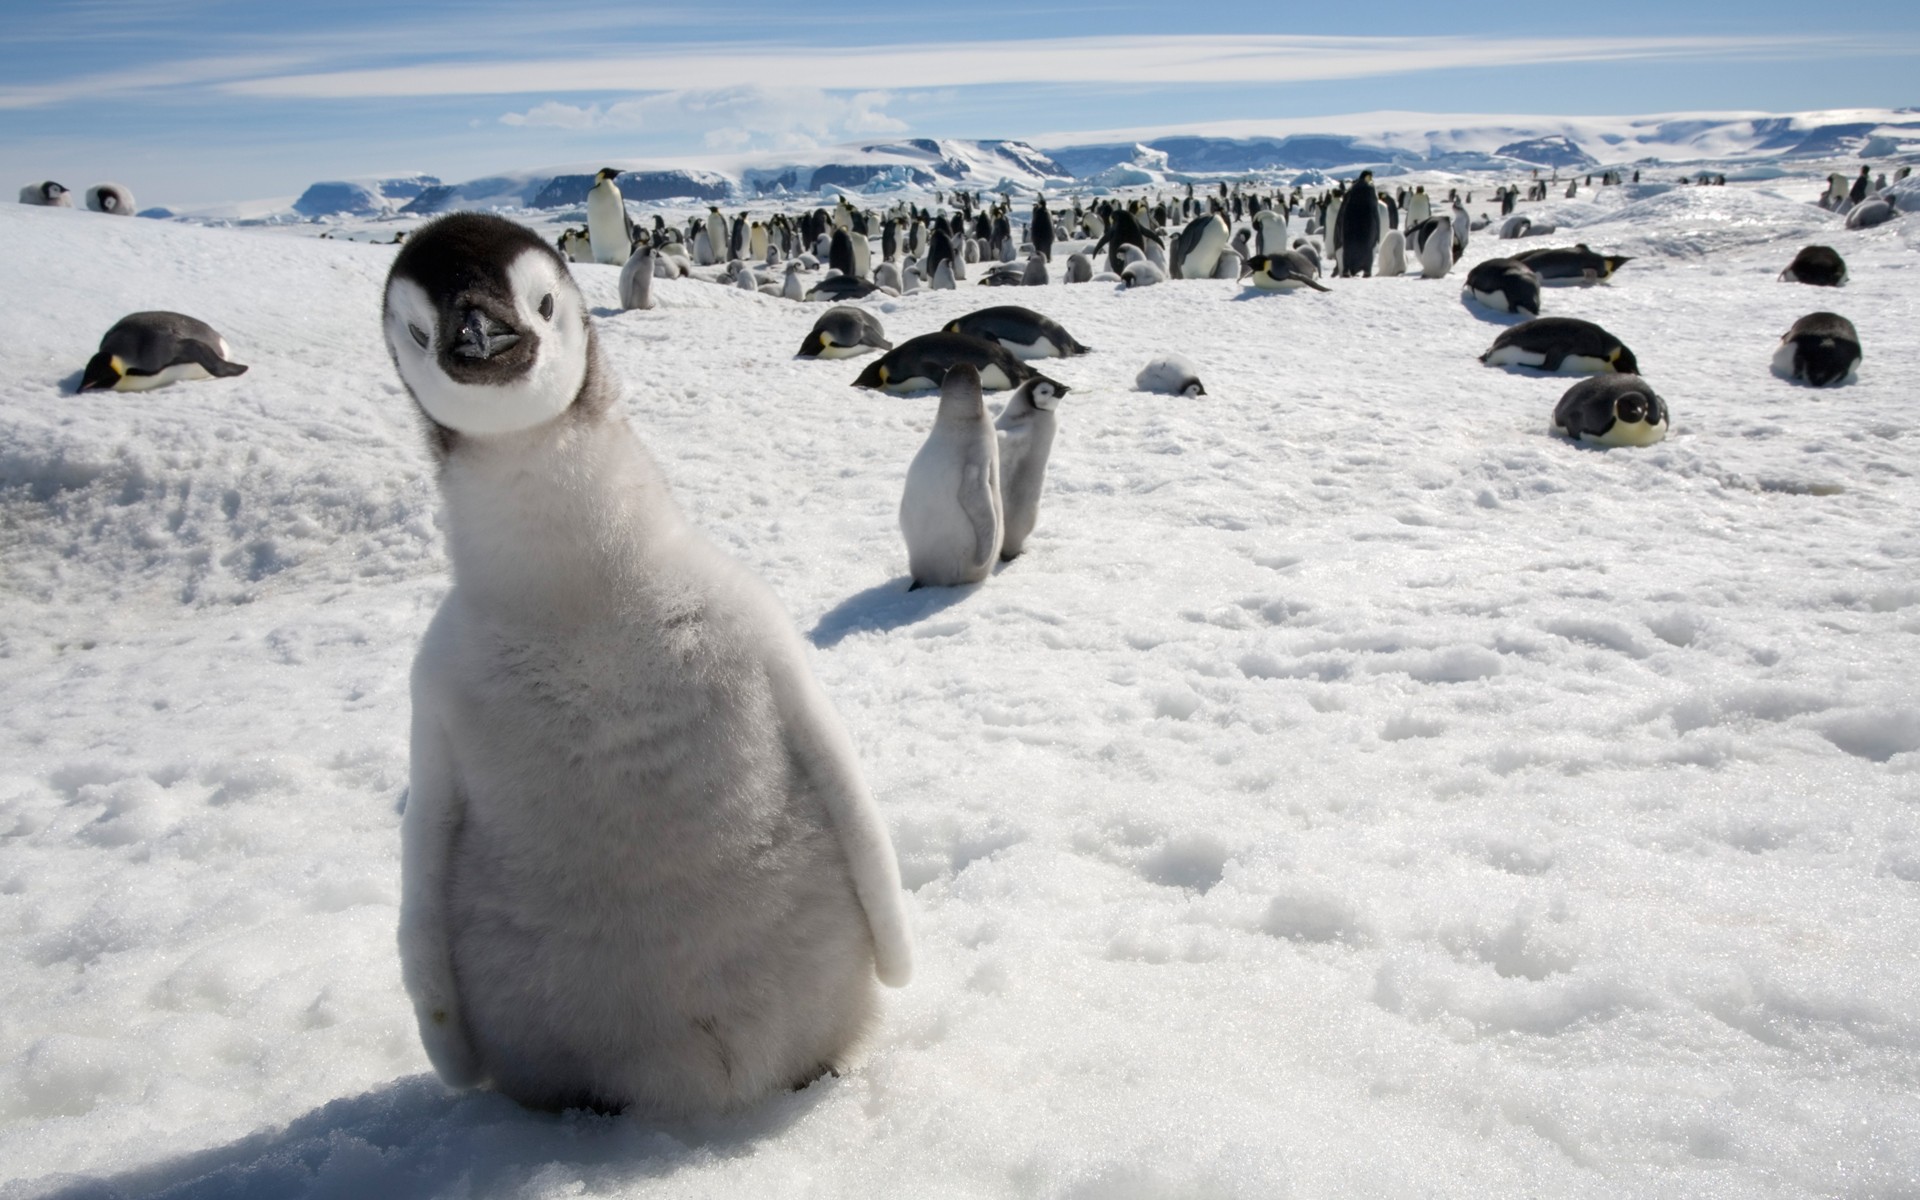 General 1920x1200 nature animals wildlife birds penguins baby animals snow ice cold landscape